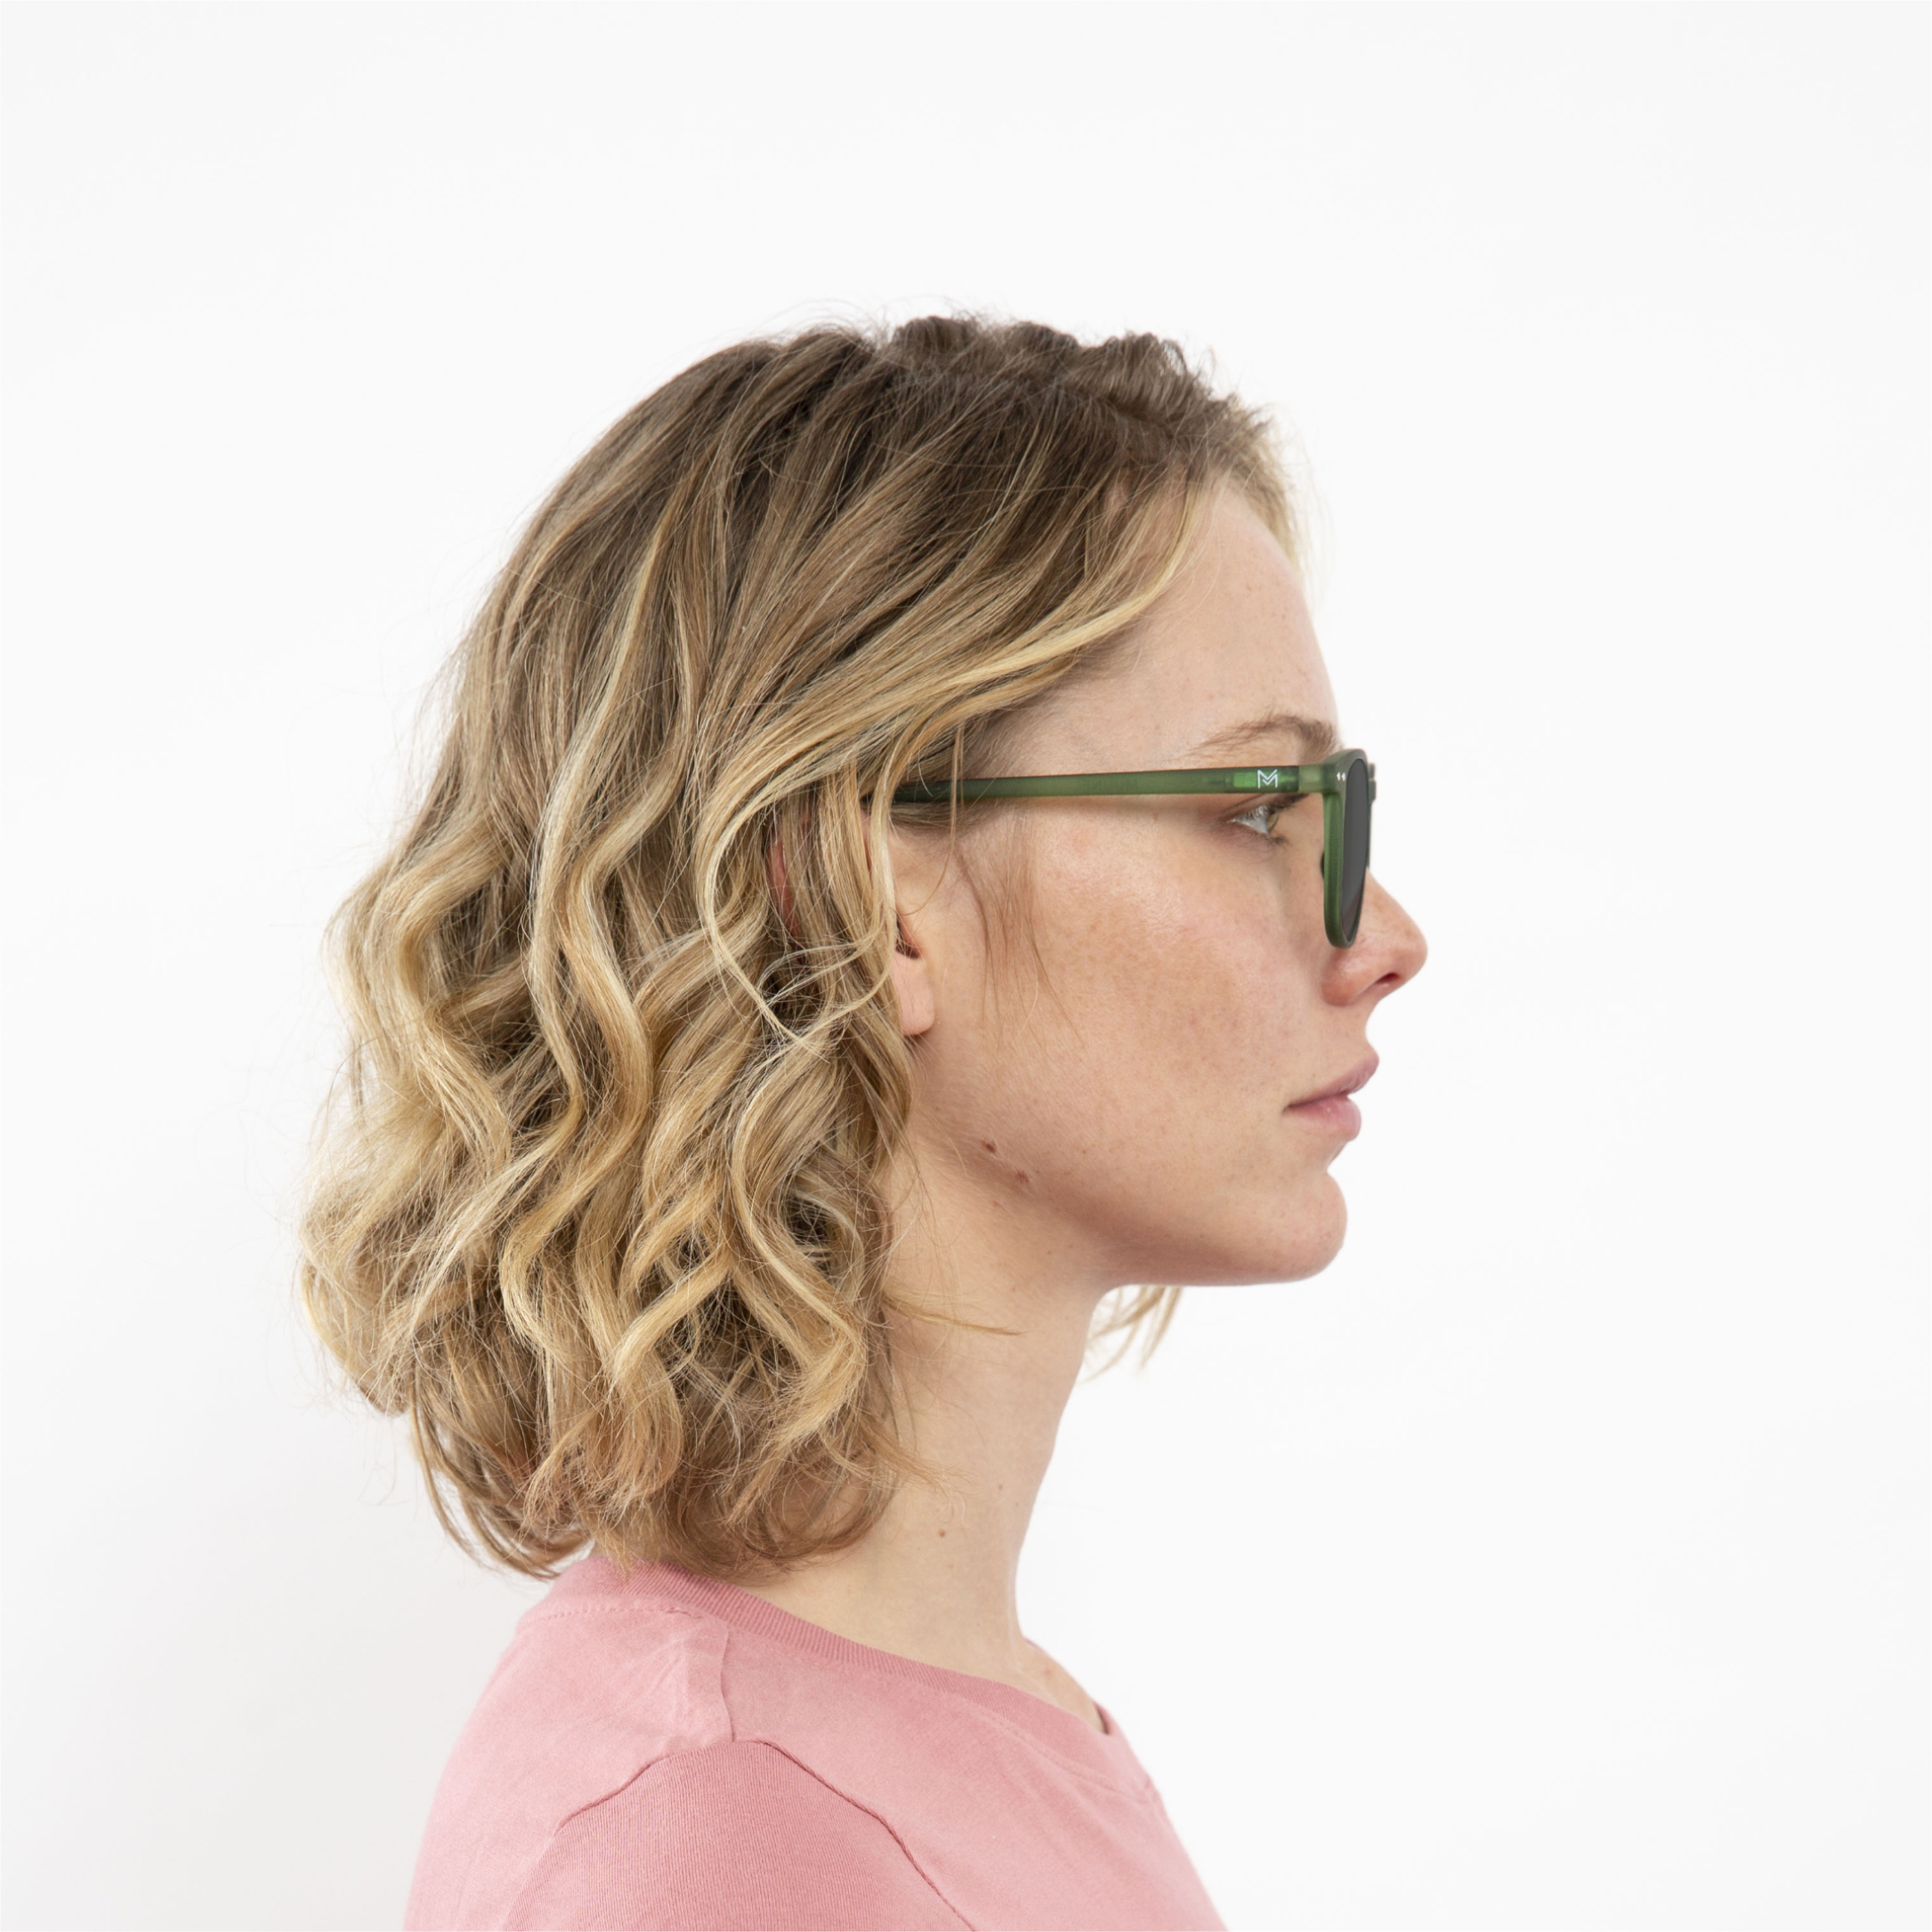 transition-photochromic-glasses-grey-lenses-women-william-green-profile (2)